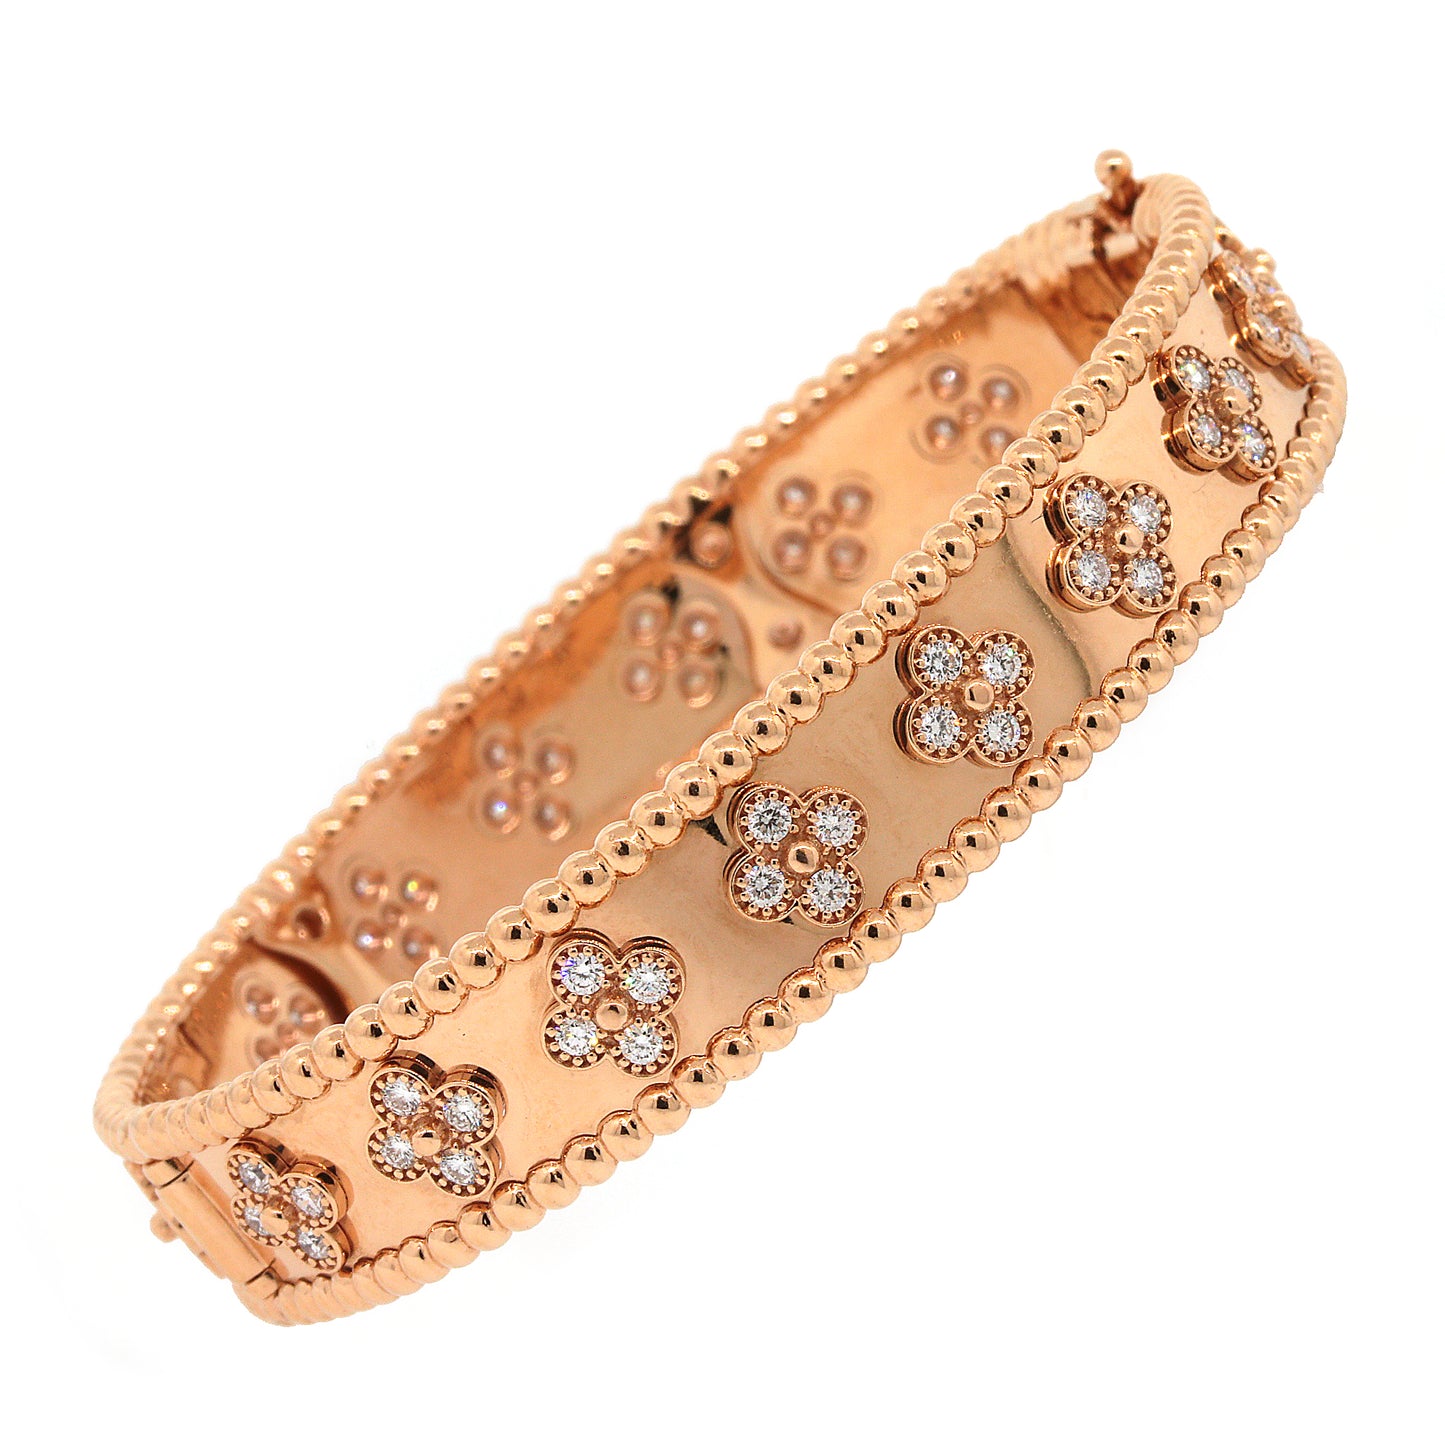 Pre-Owned Van Cleef & Arpels Perlée Collection Diamond Bracelet in 18k Gold